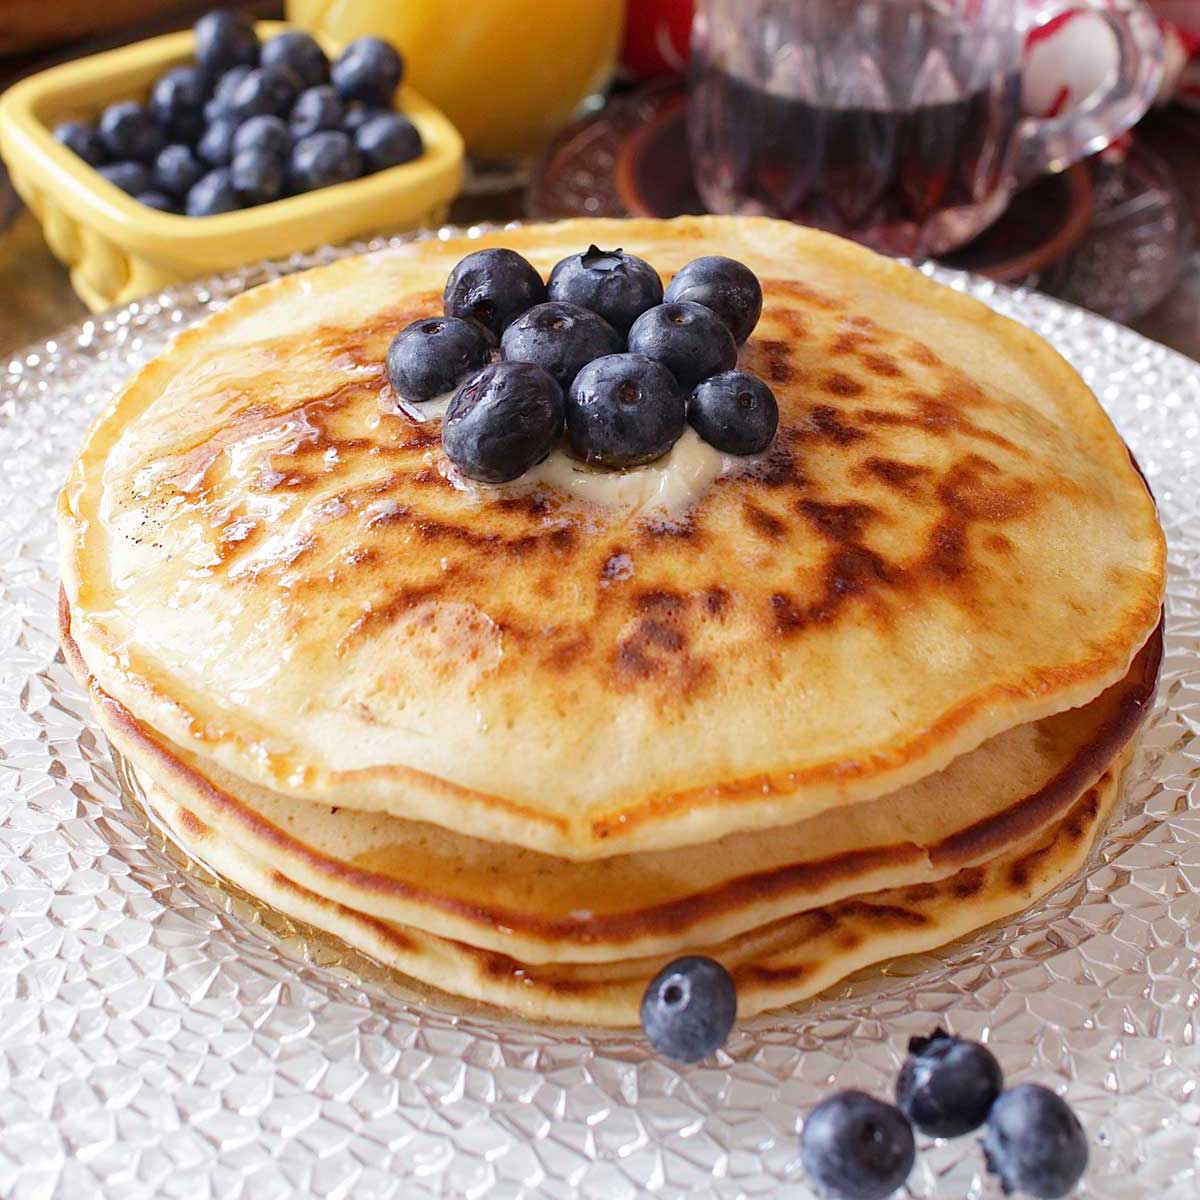 Share 55 kuva easy pancake recipe for one